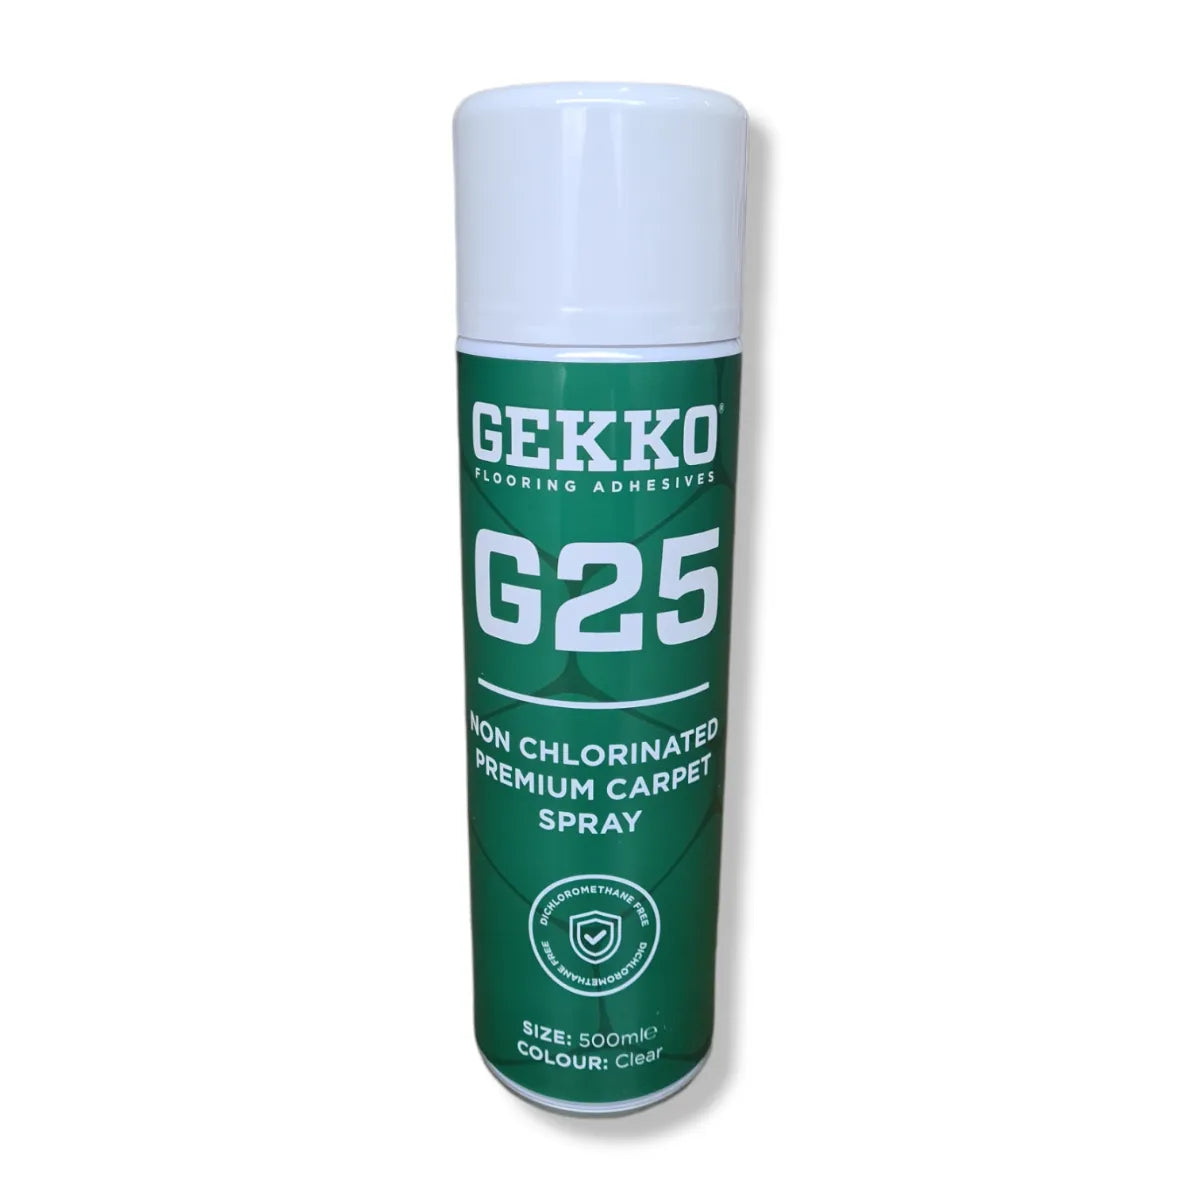 Gekko G25 Aerosol Premium Carpet Spray Adhesive